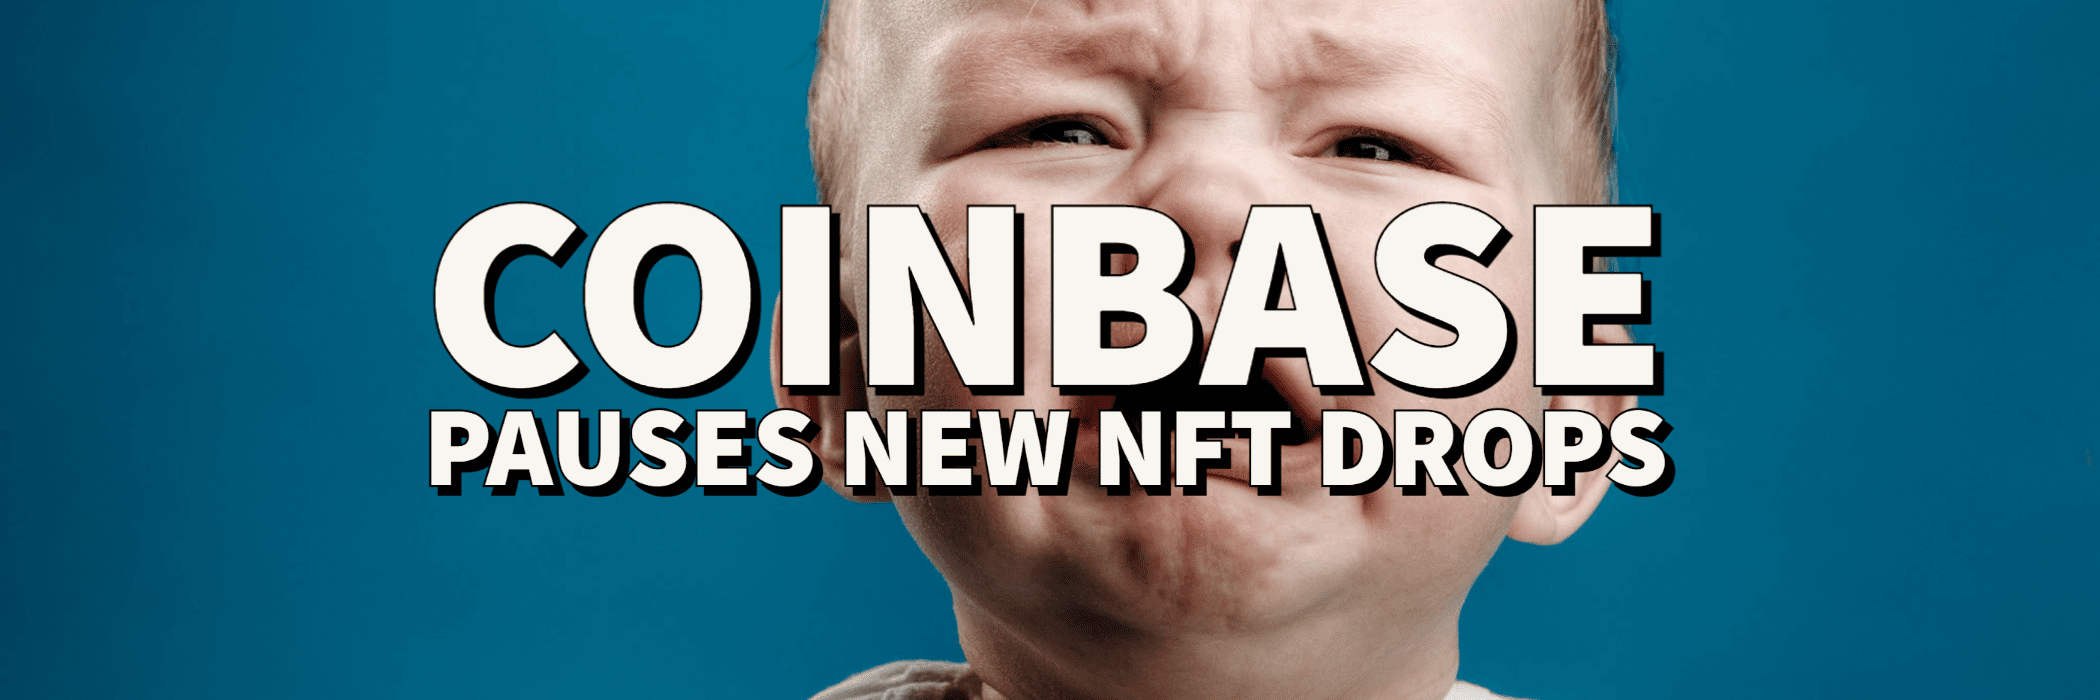 Coinbase “pauses” NFT drops moving forward.